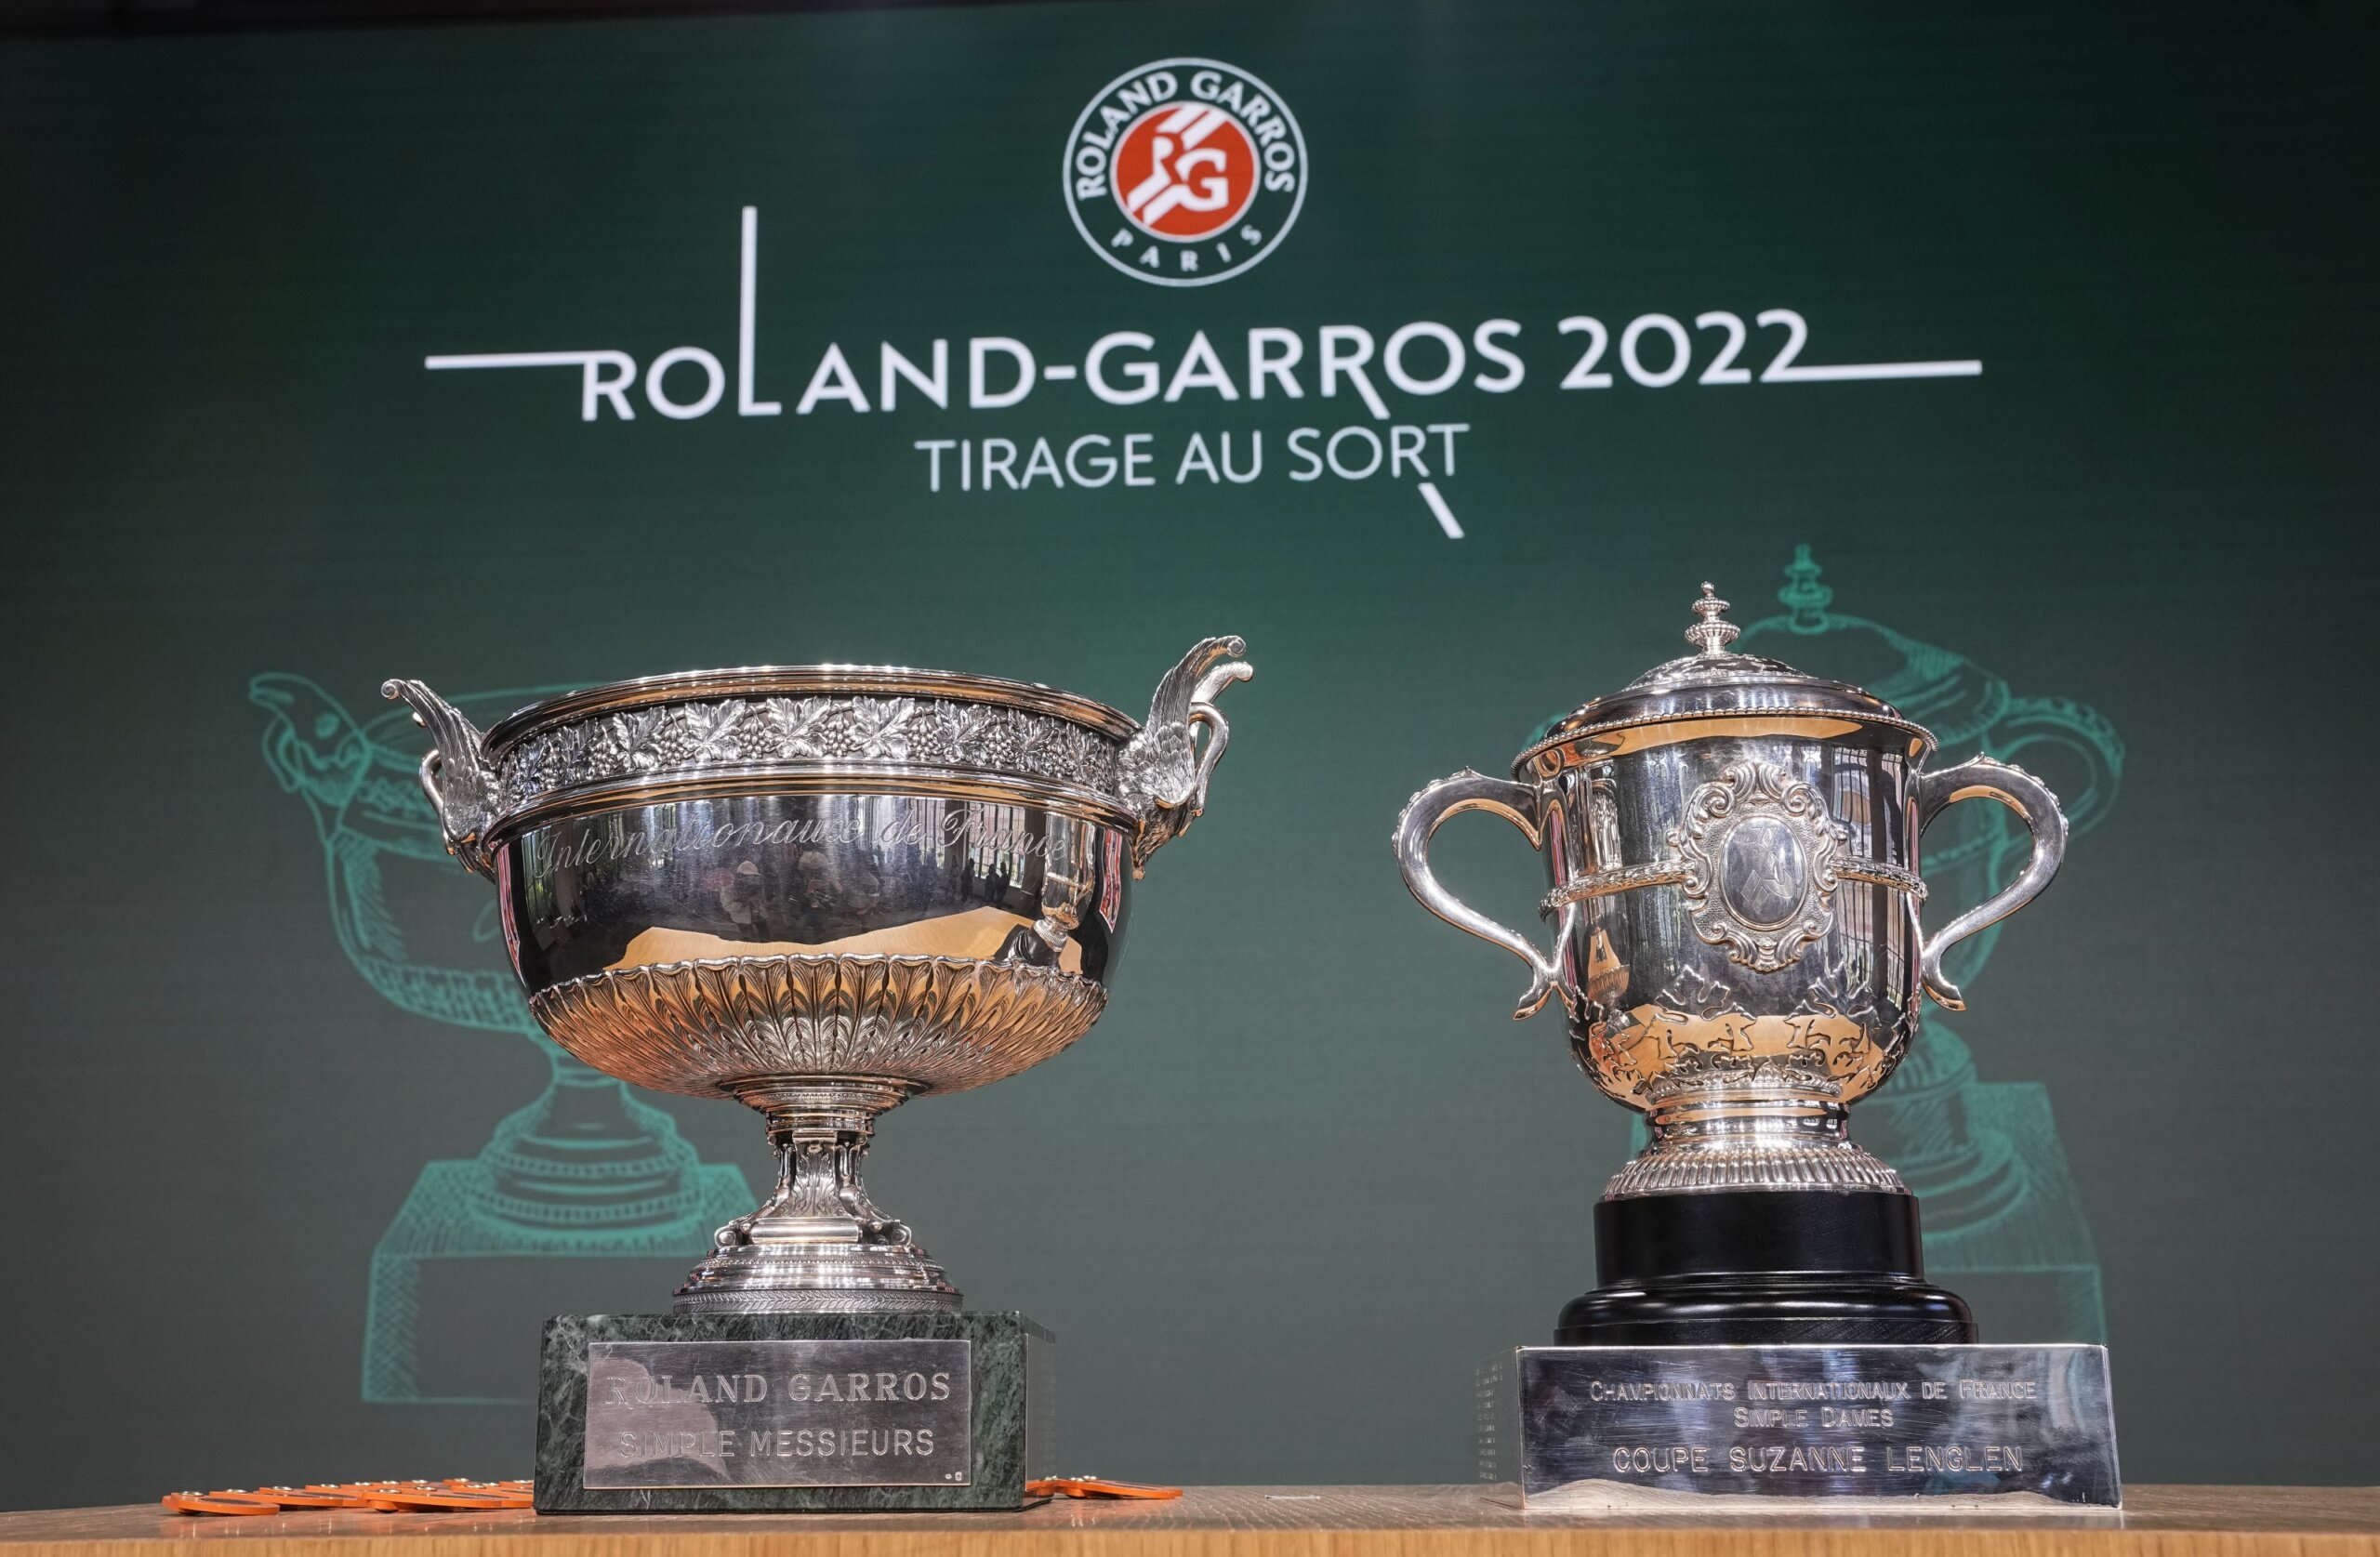 FRENCH OPEN: Djokovic, Krejcikova try to defend Paris titles - WTOP News